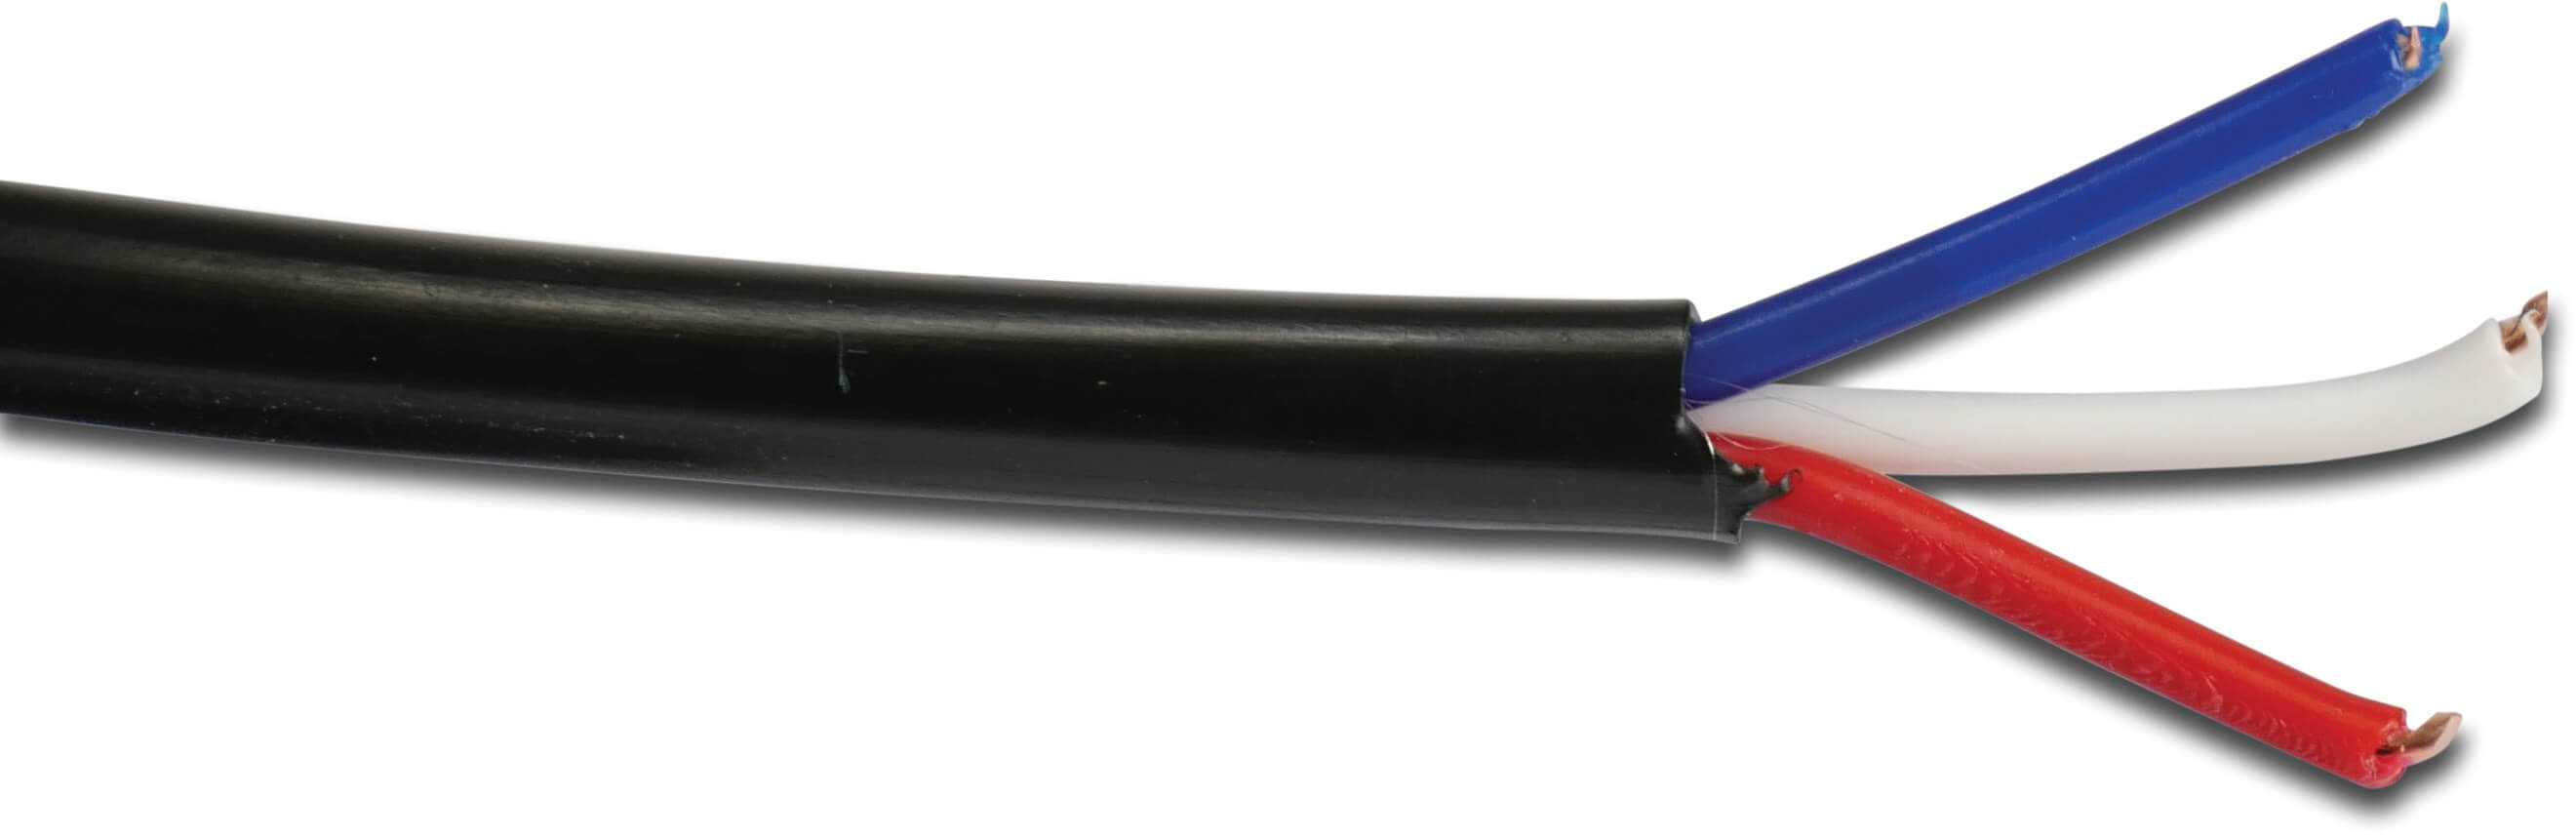 Elektriciteitskabel koper zwart 50m type 3 x 0,75mm² 3 colour coded conductors